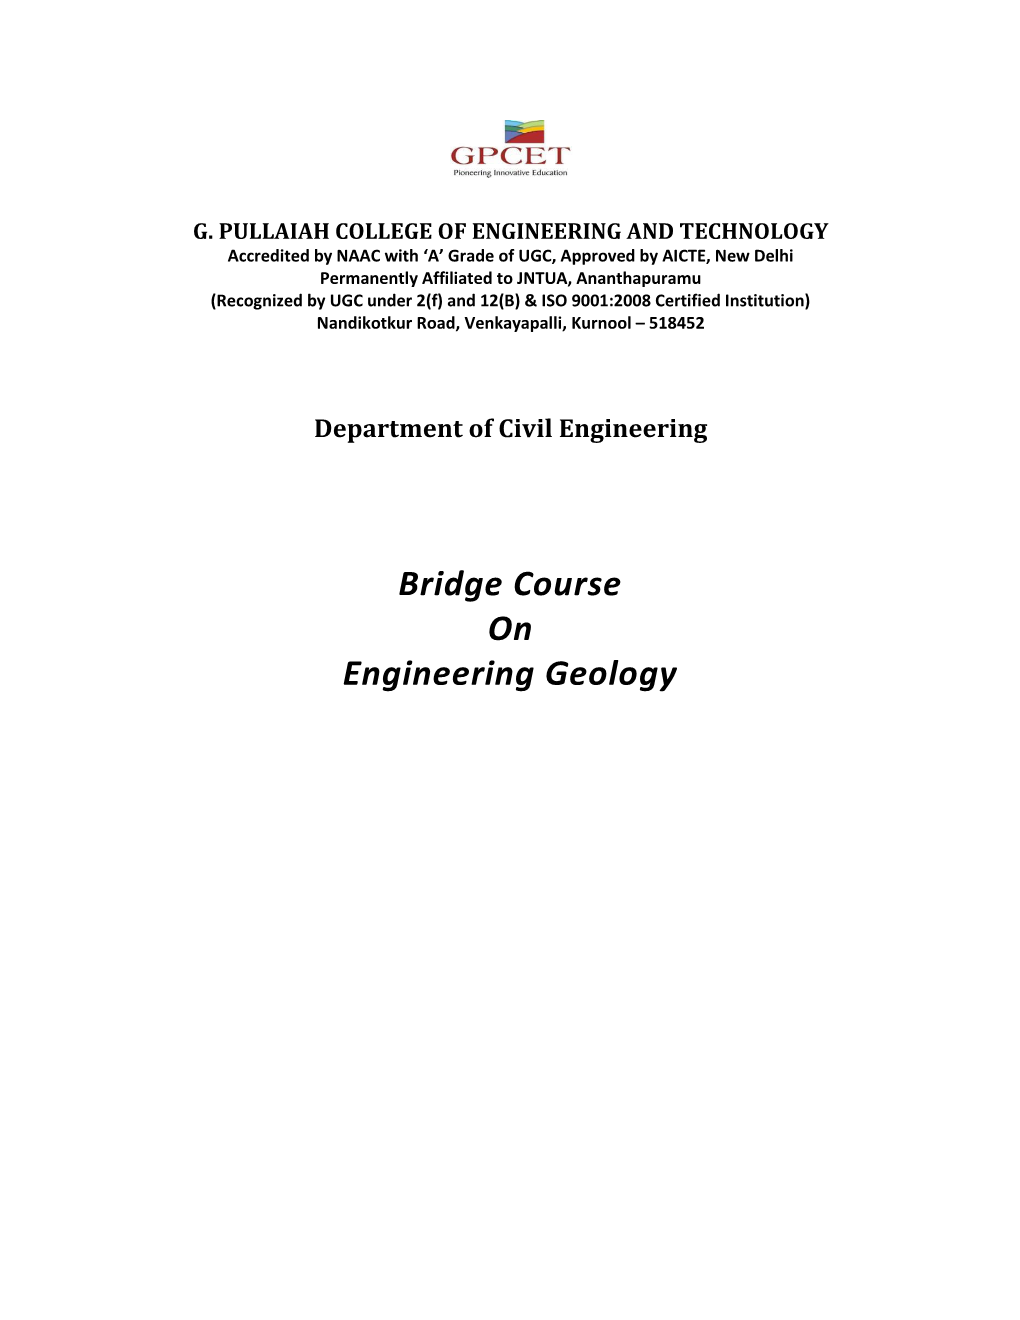 Bridge Course on Engineering Geology